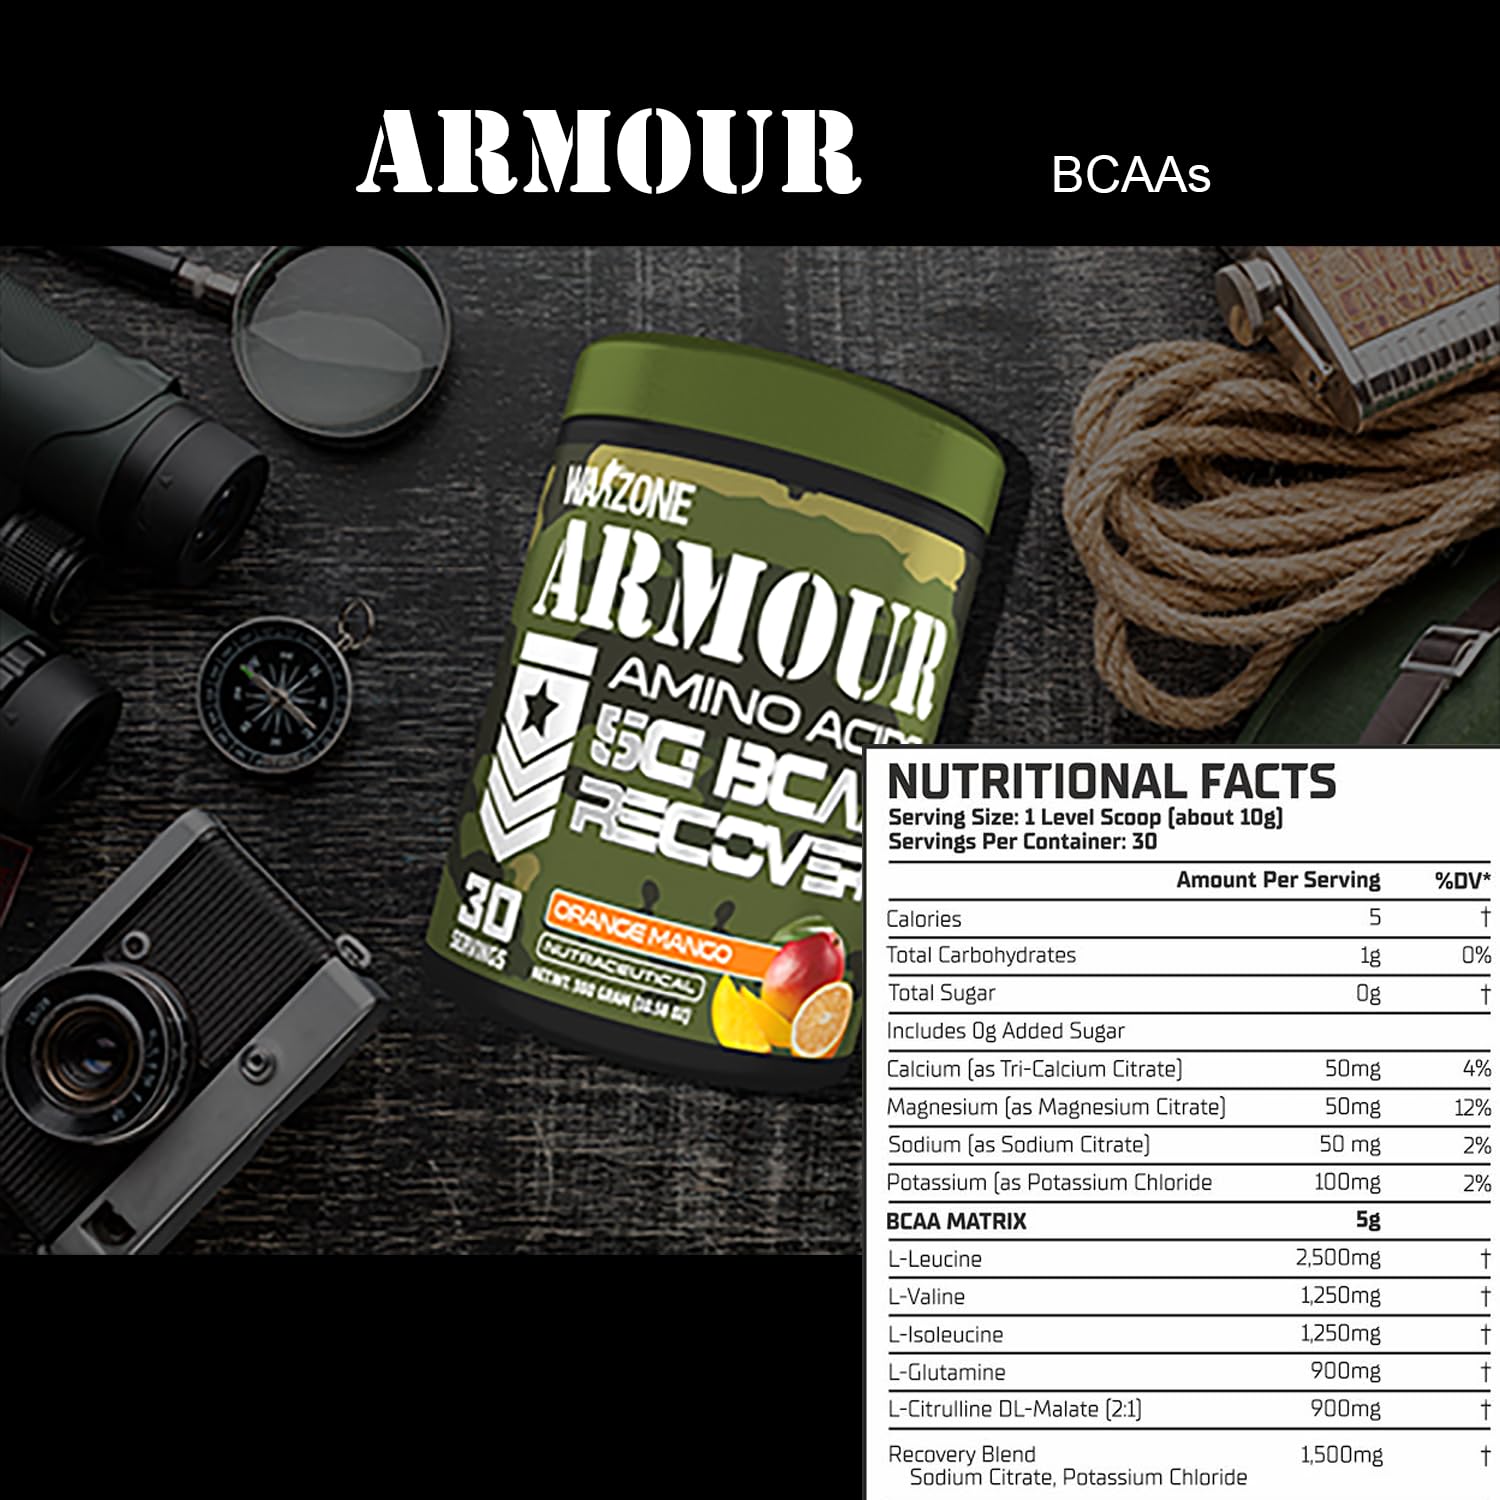 Warzone Armour Amino Acids 5G BCAA + Recovery